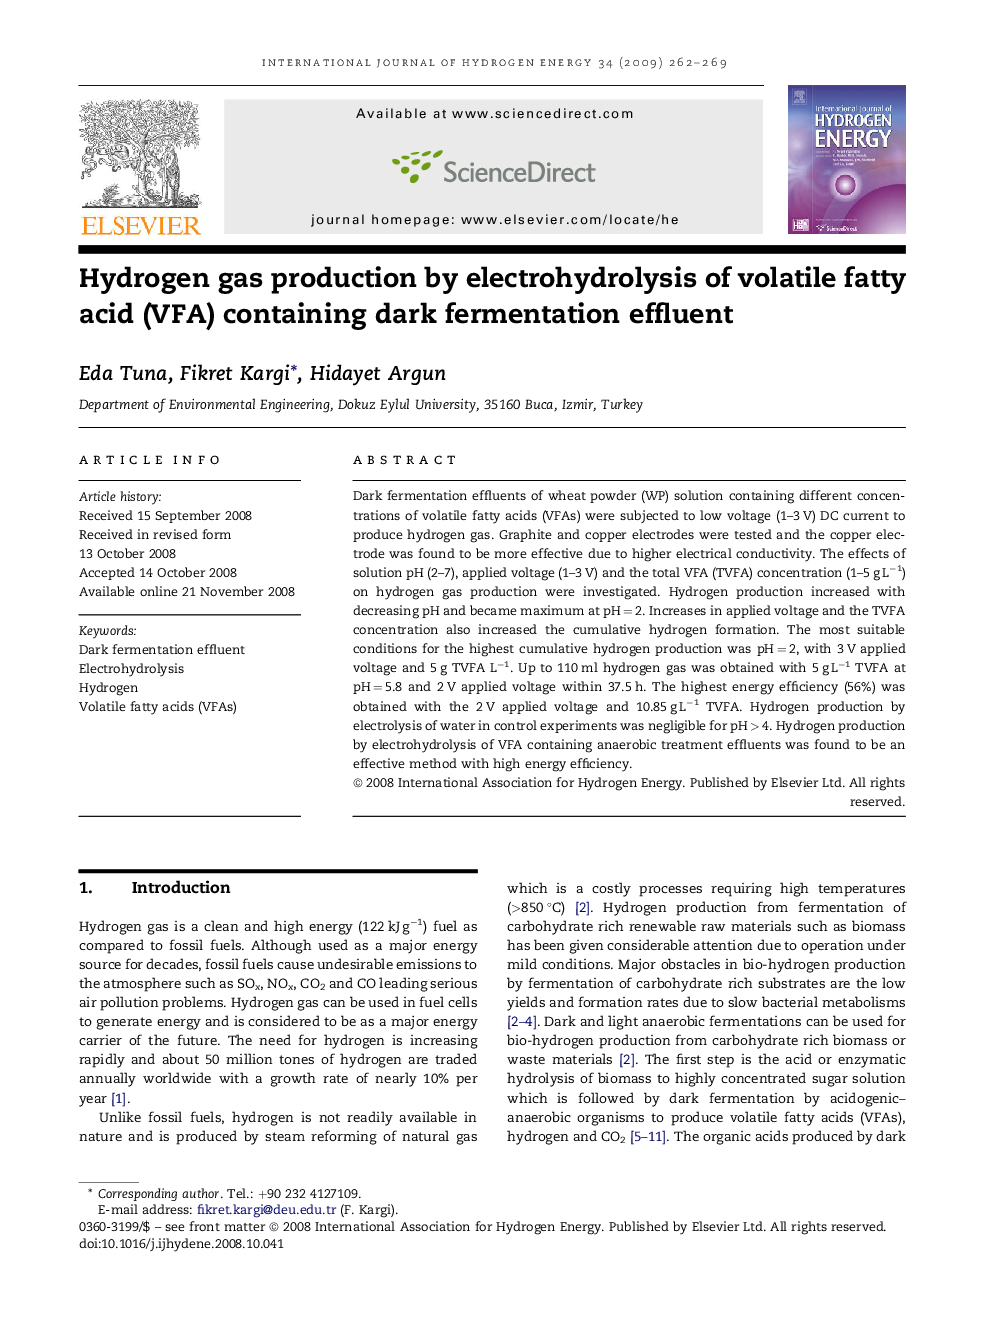 Hydrogen gas production by electrohydrolysis of volatile fatty acid (VFA) containing dark fermentation effluent